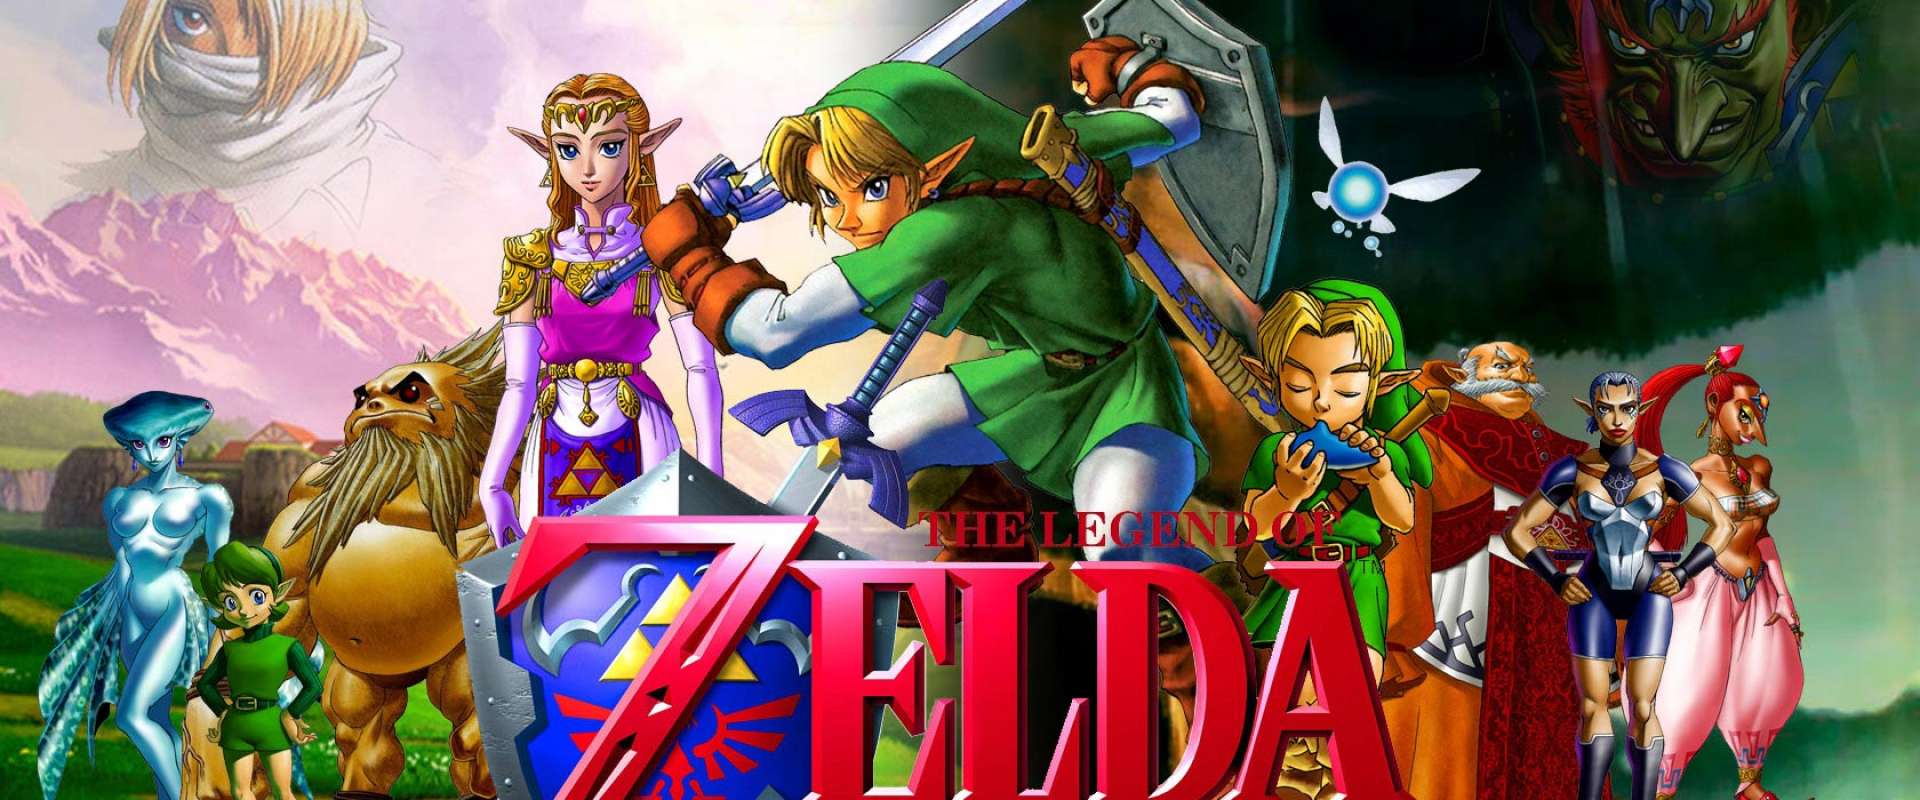 Download do Zelda Ocarina OF Time Pt-Br para Android 